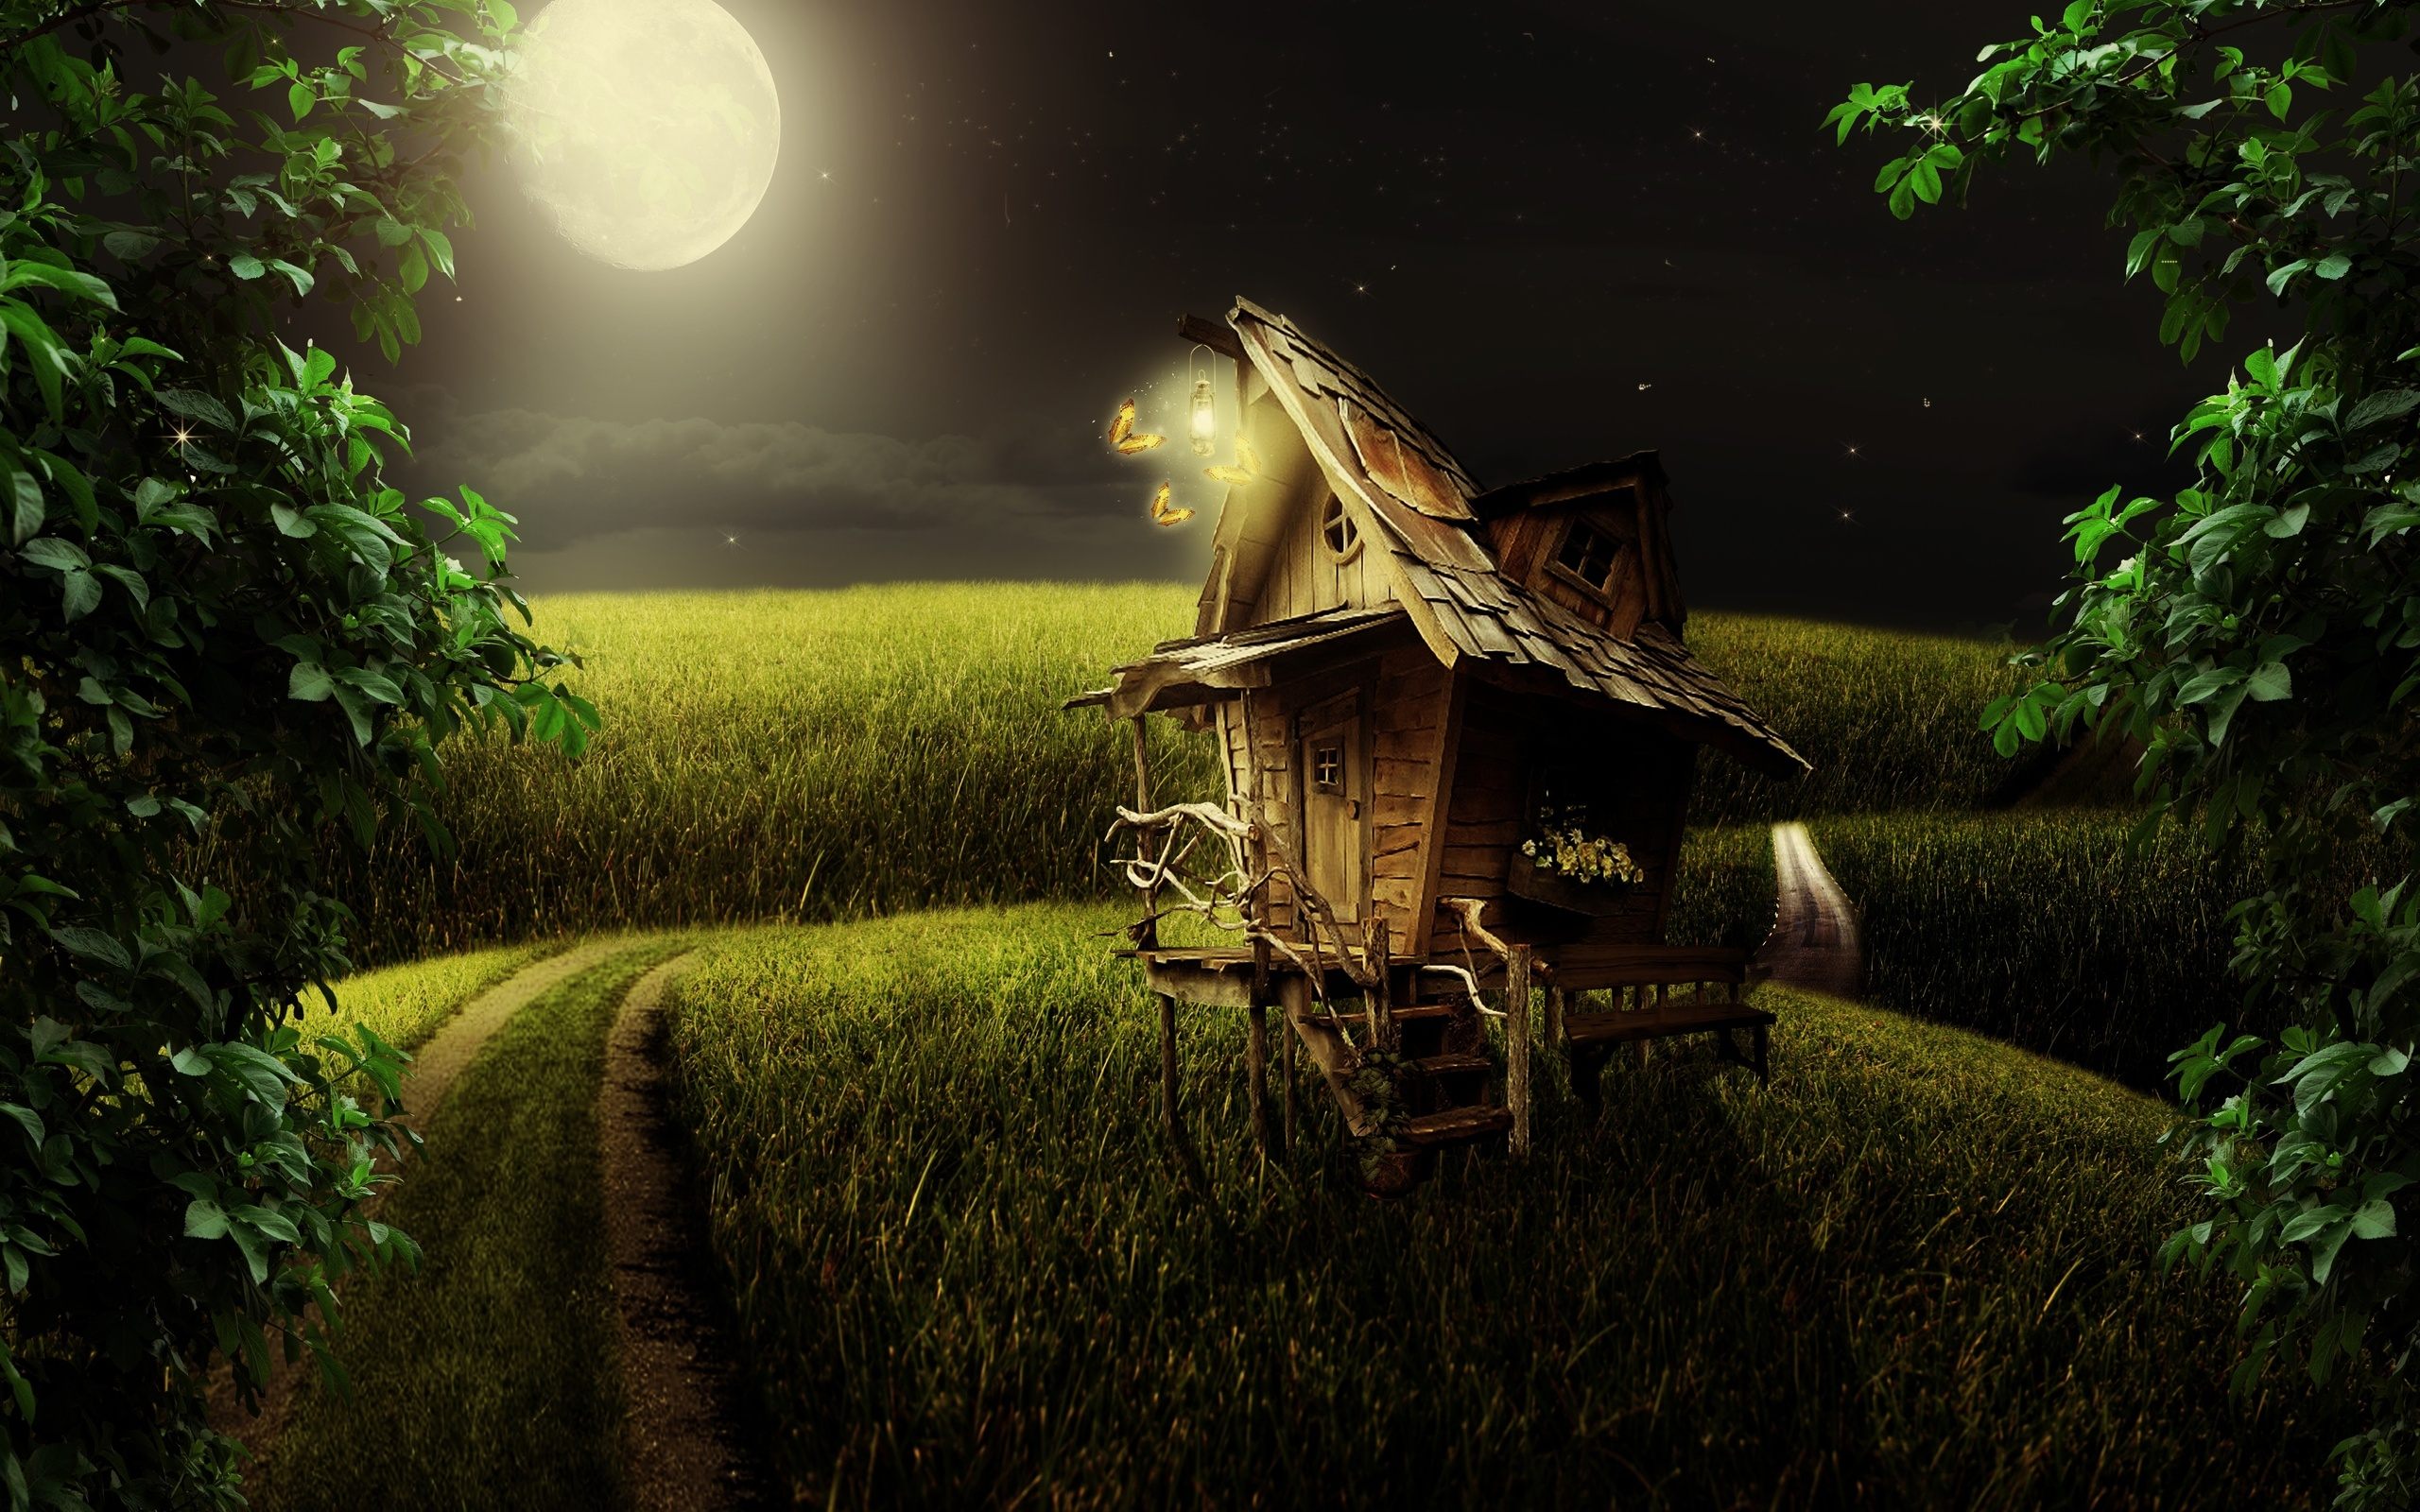 Night Moon Fantasy Landscape Wallpaper HD Free Download